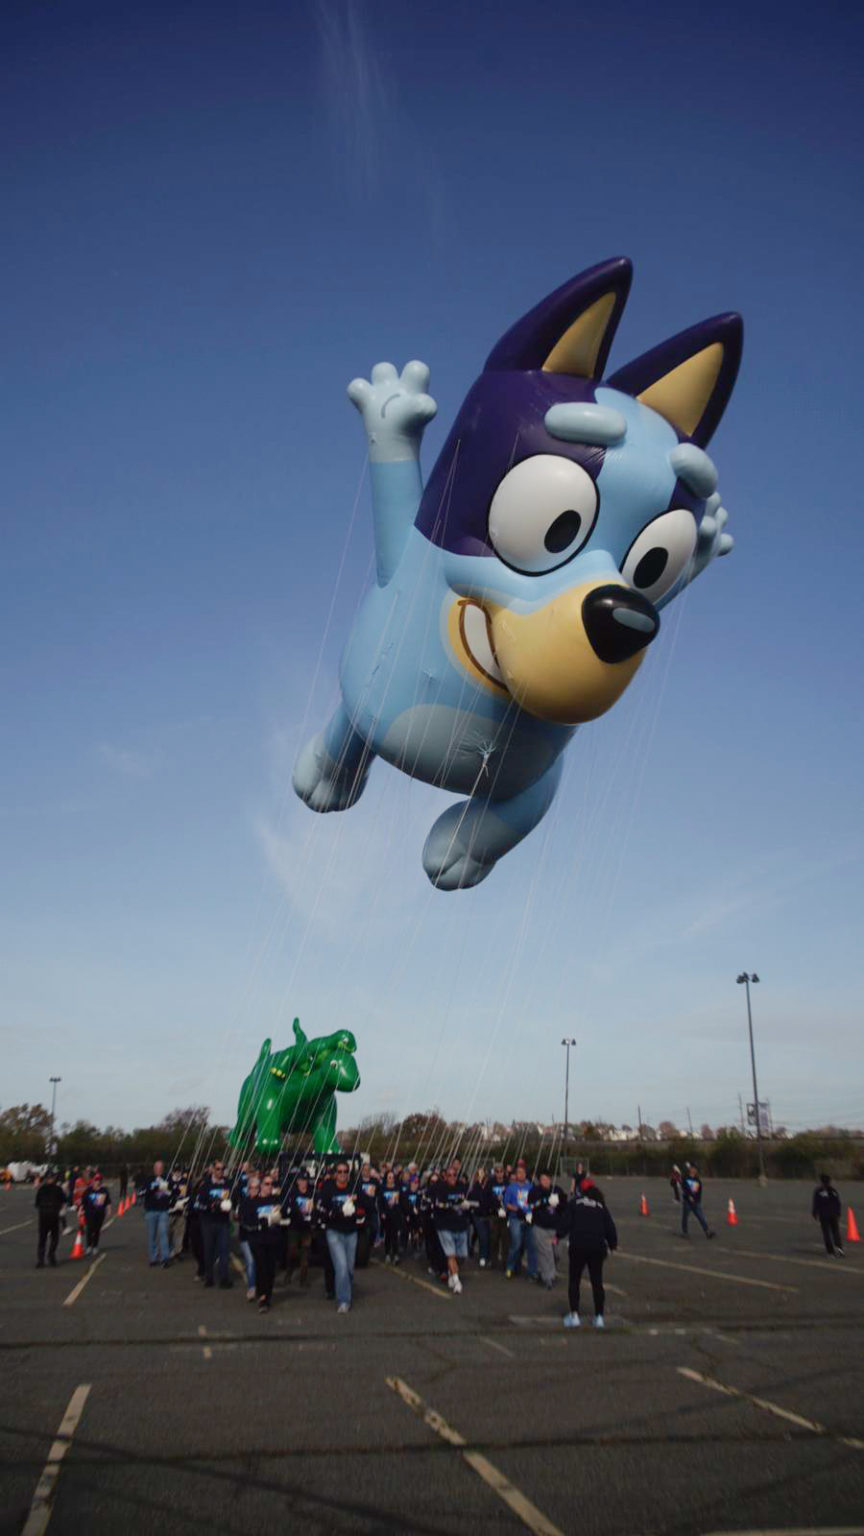 Sneak Peek at Bluey Balloon for Macy's Parade